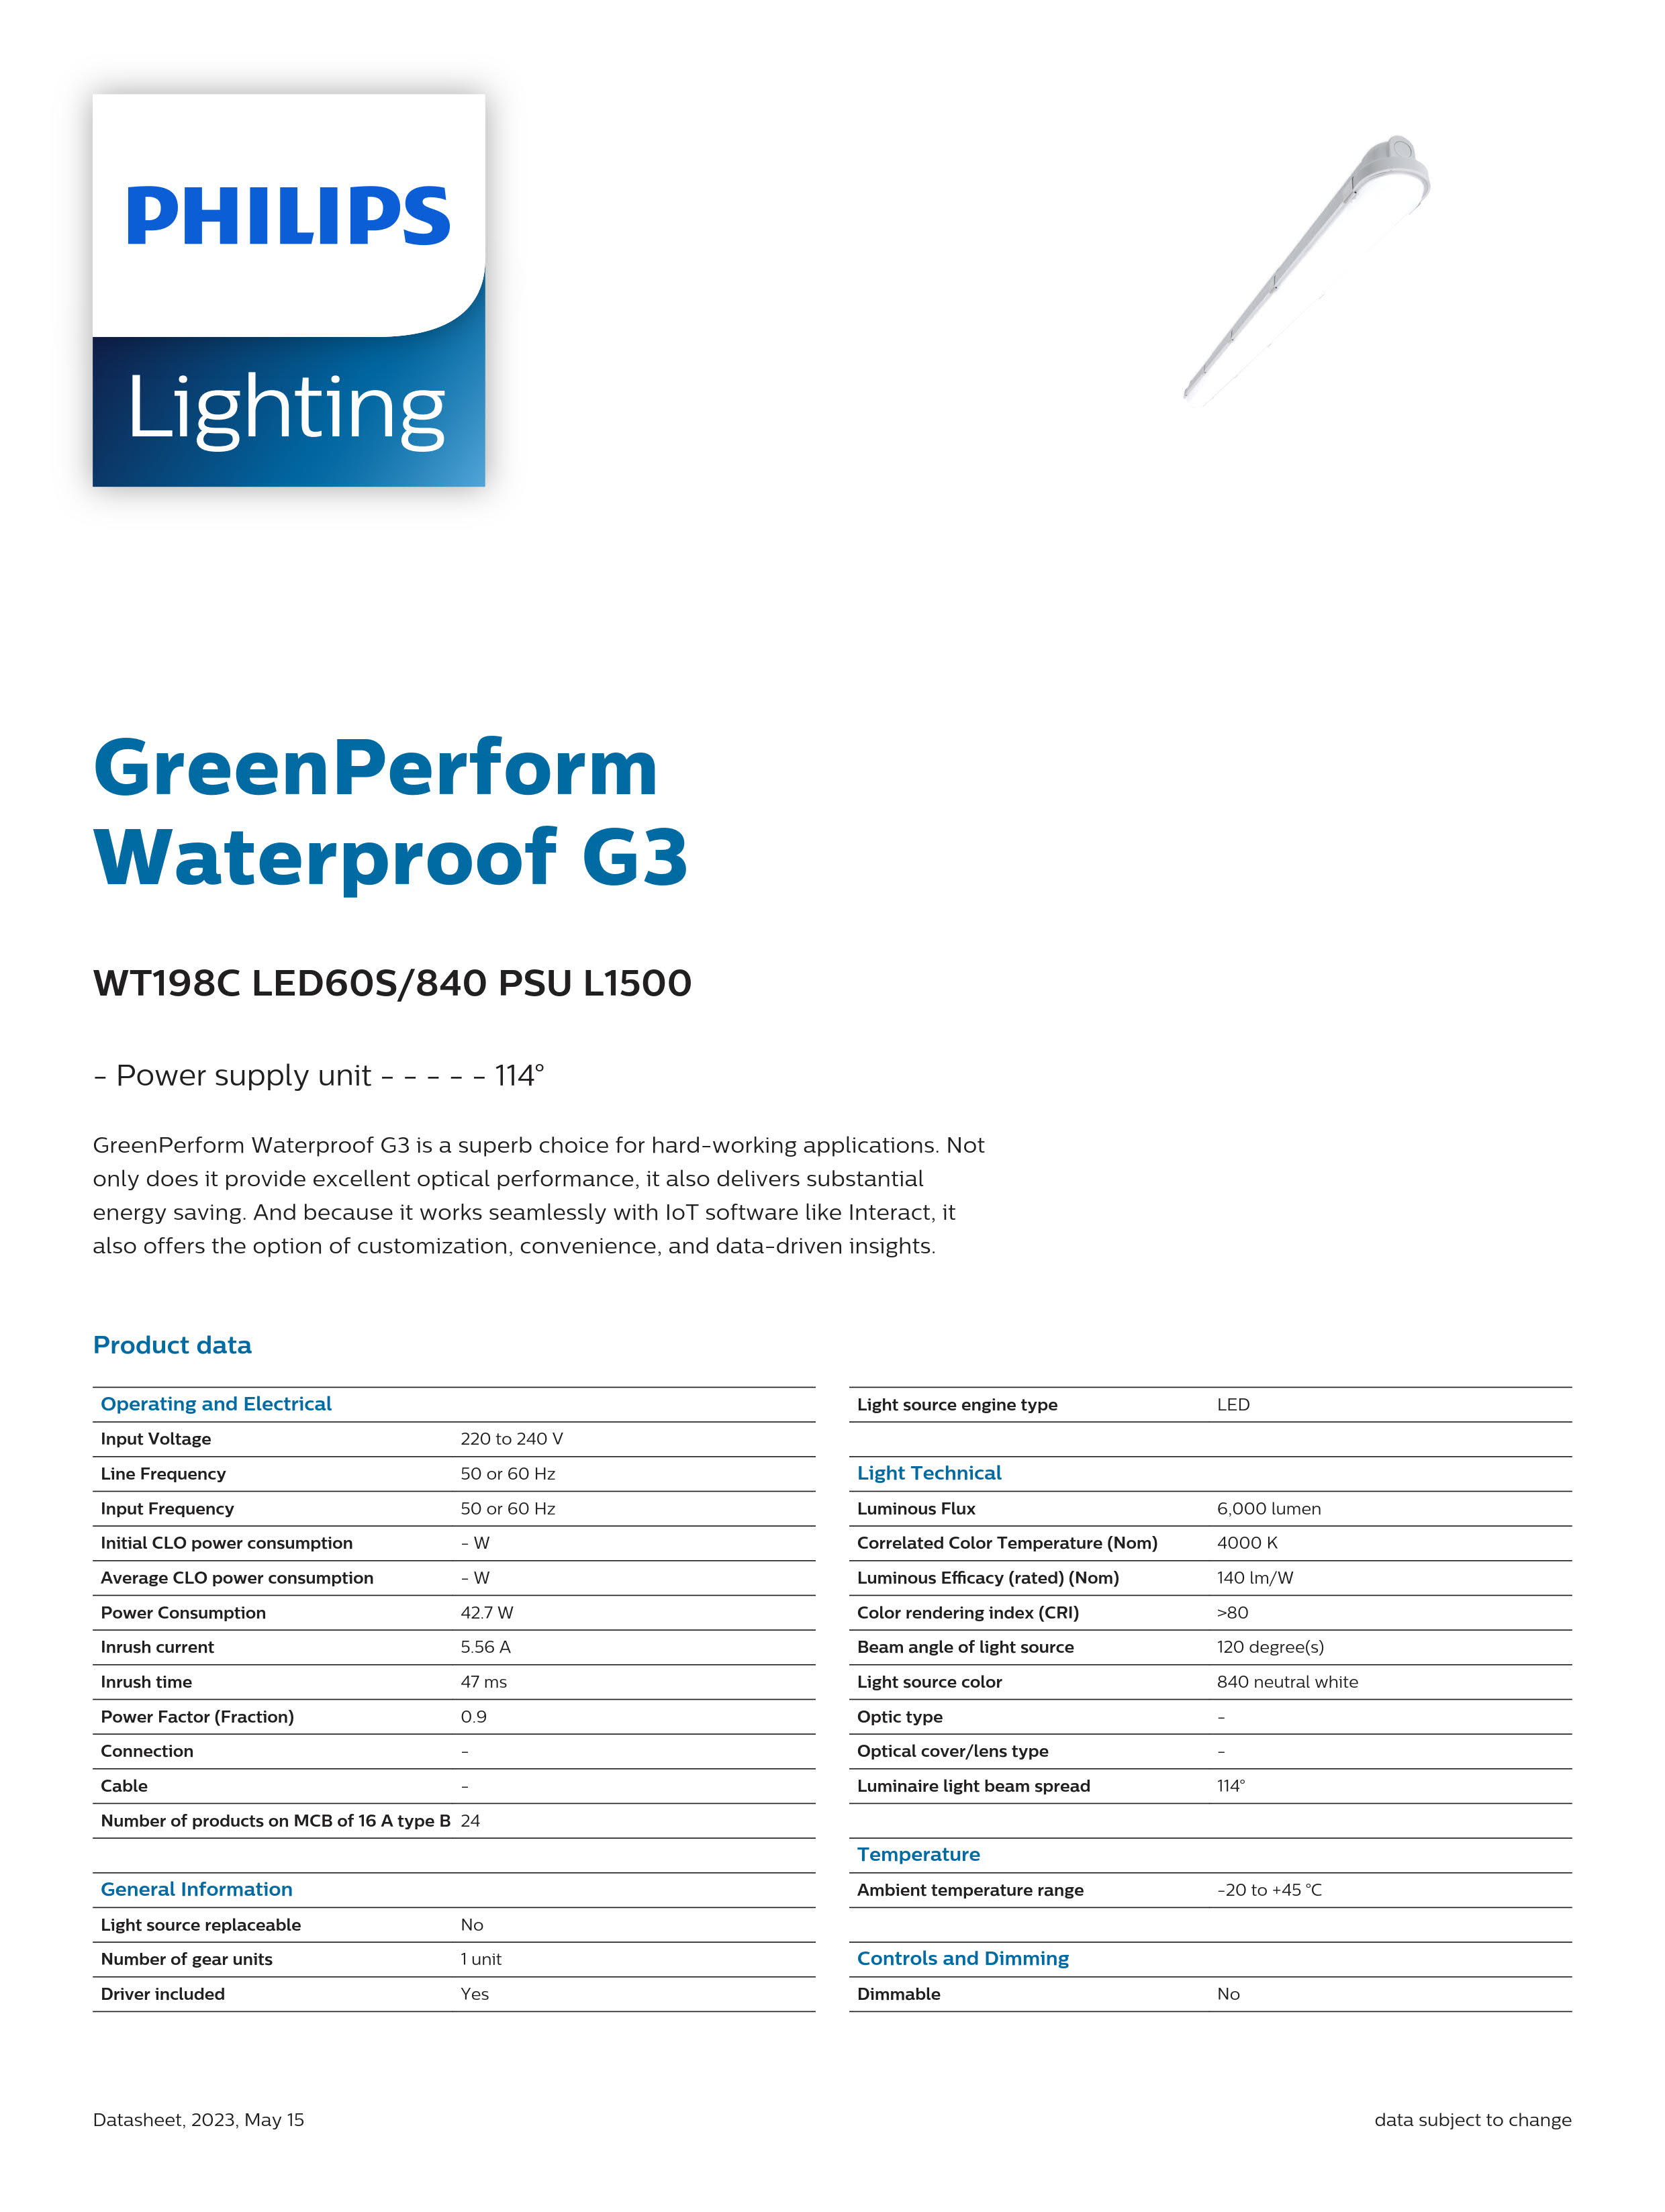 PHILIPS Waterproof WT198C LED60S/840 PSU L1500 911401825880